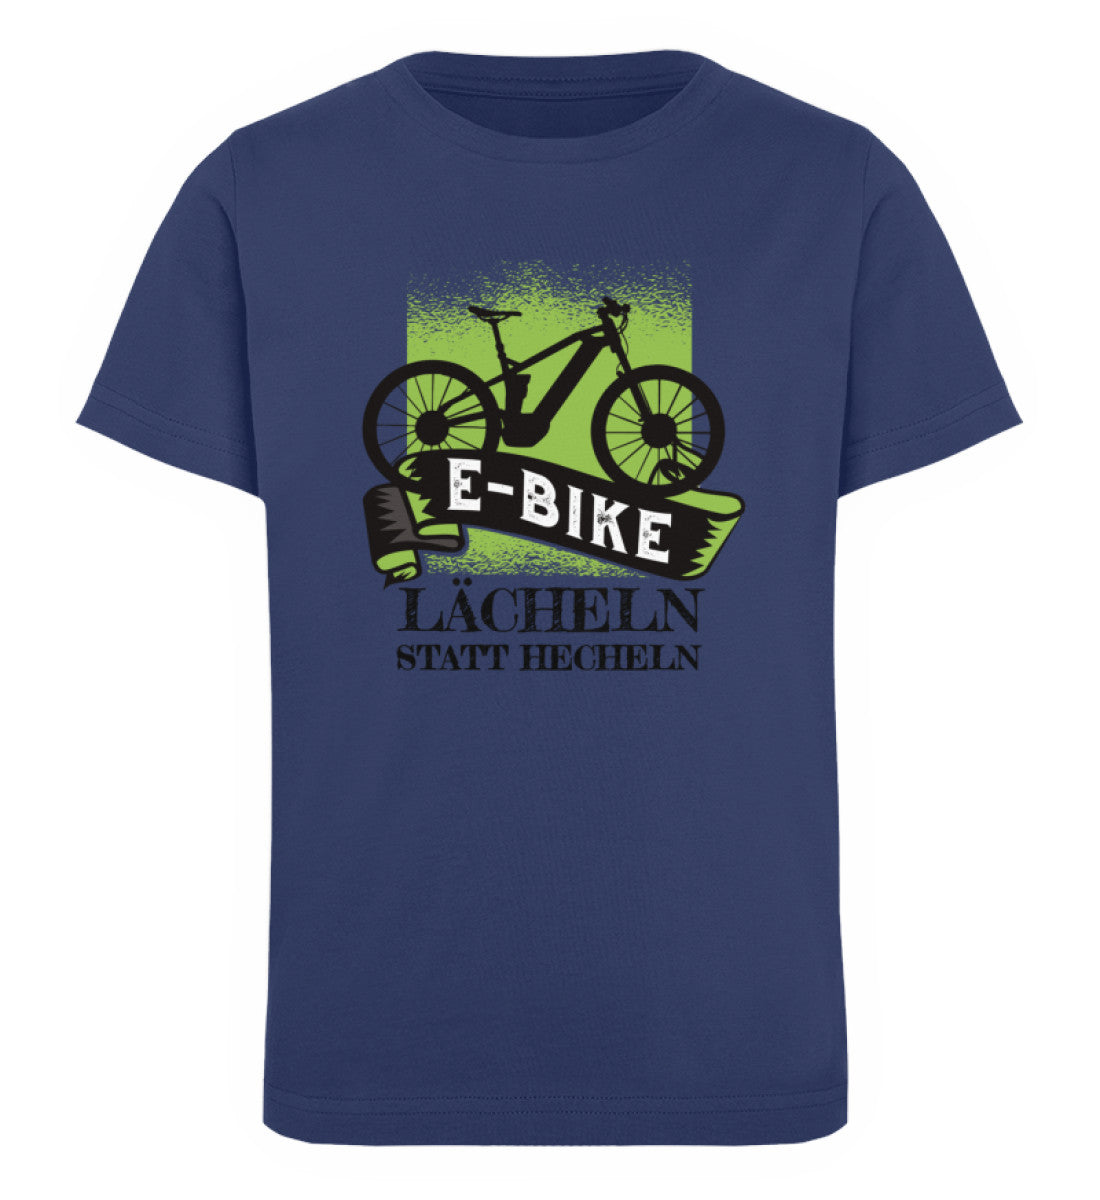 E-Bike - Lächeln statt hecheln - Kinder Premium Organic T-Shirt e-bike Navyblau